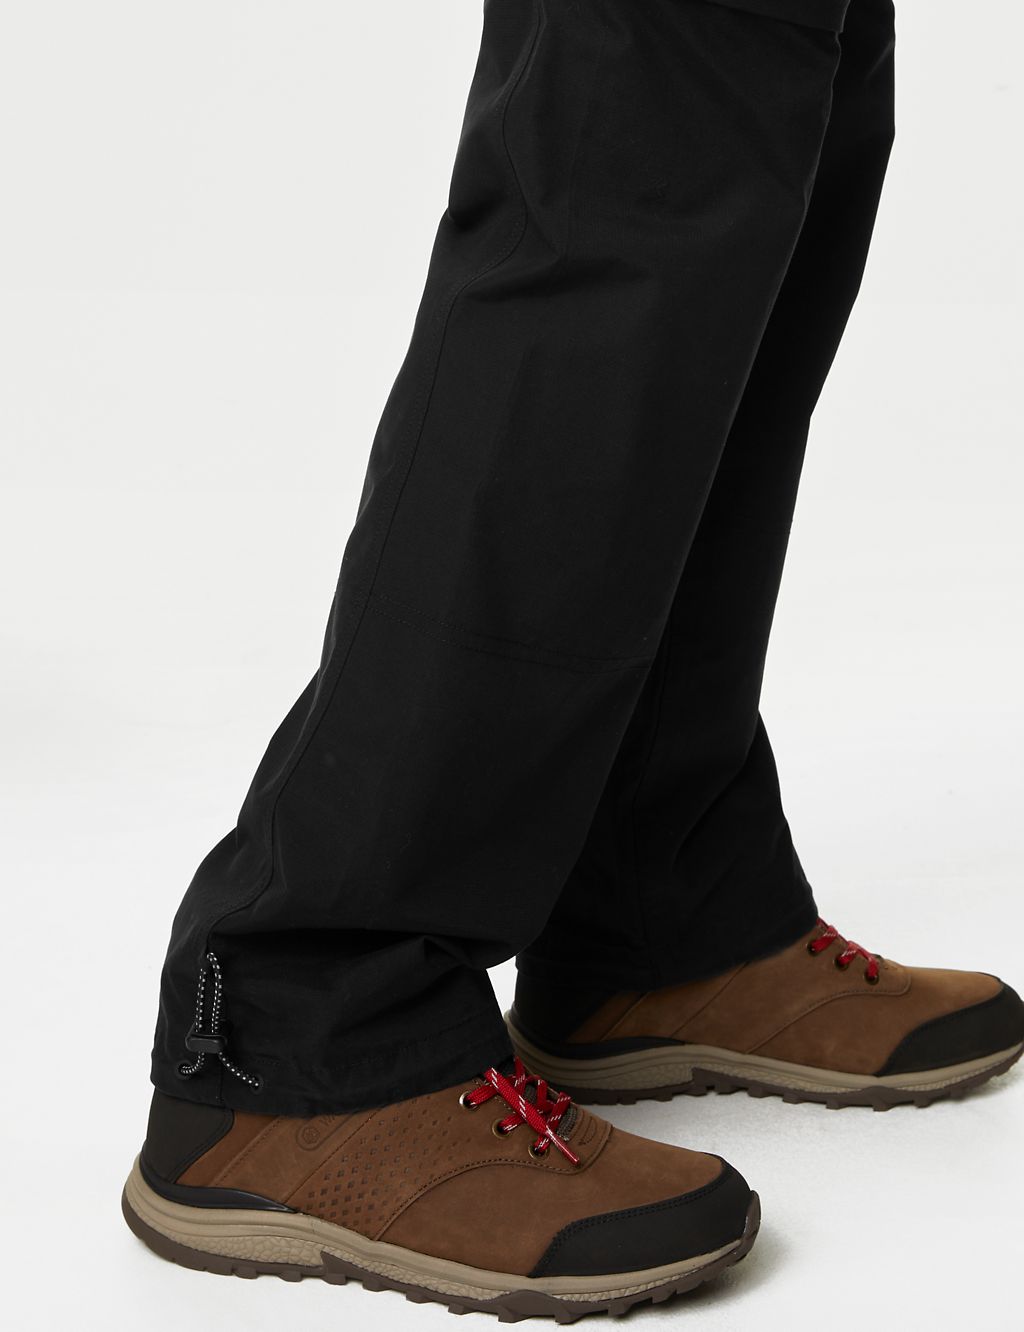 Zip Off Trekking Trousers with Stormwear™ 4 of 8